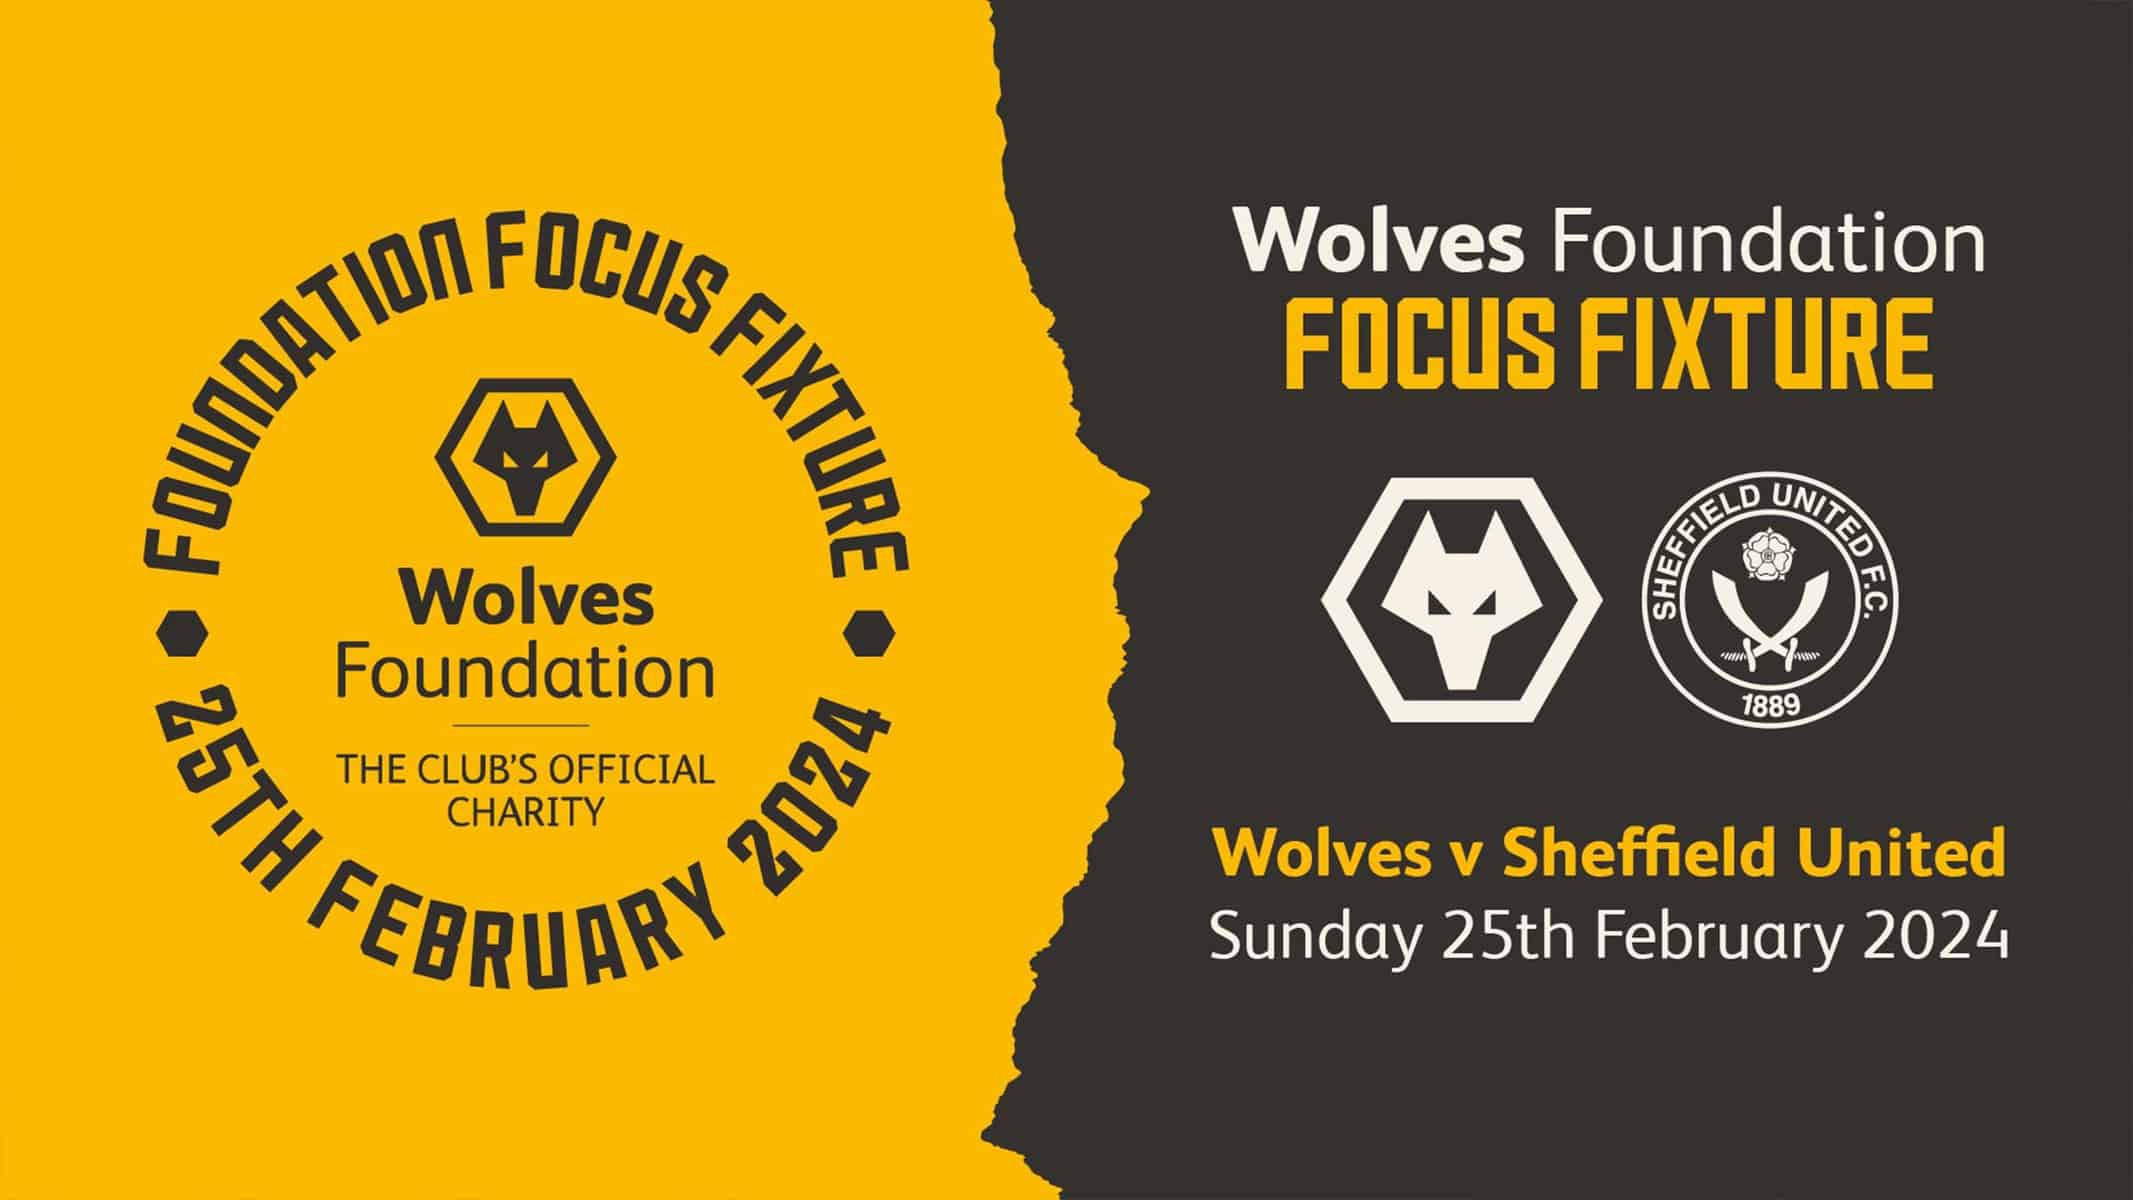 Wolves Foundation Focus Fixture returns for Sheffield United clash Image